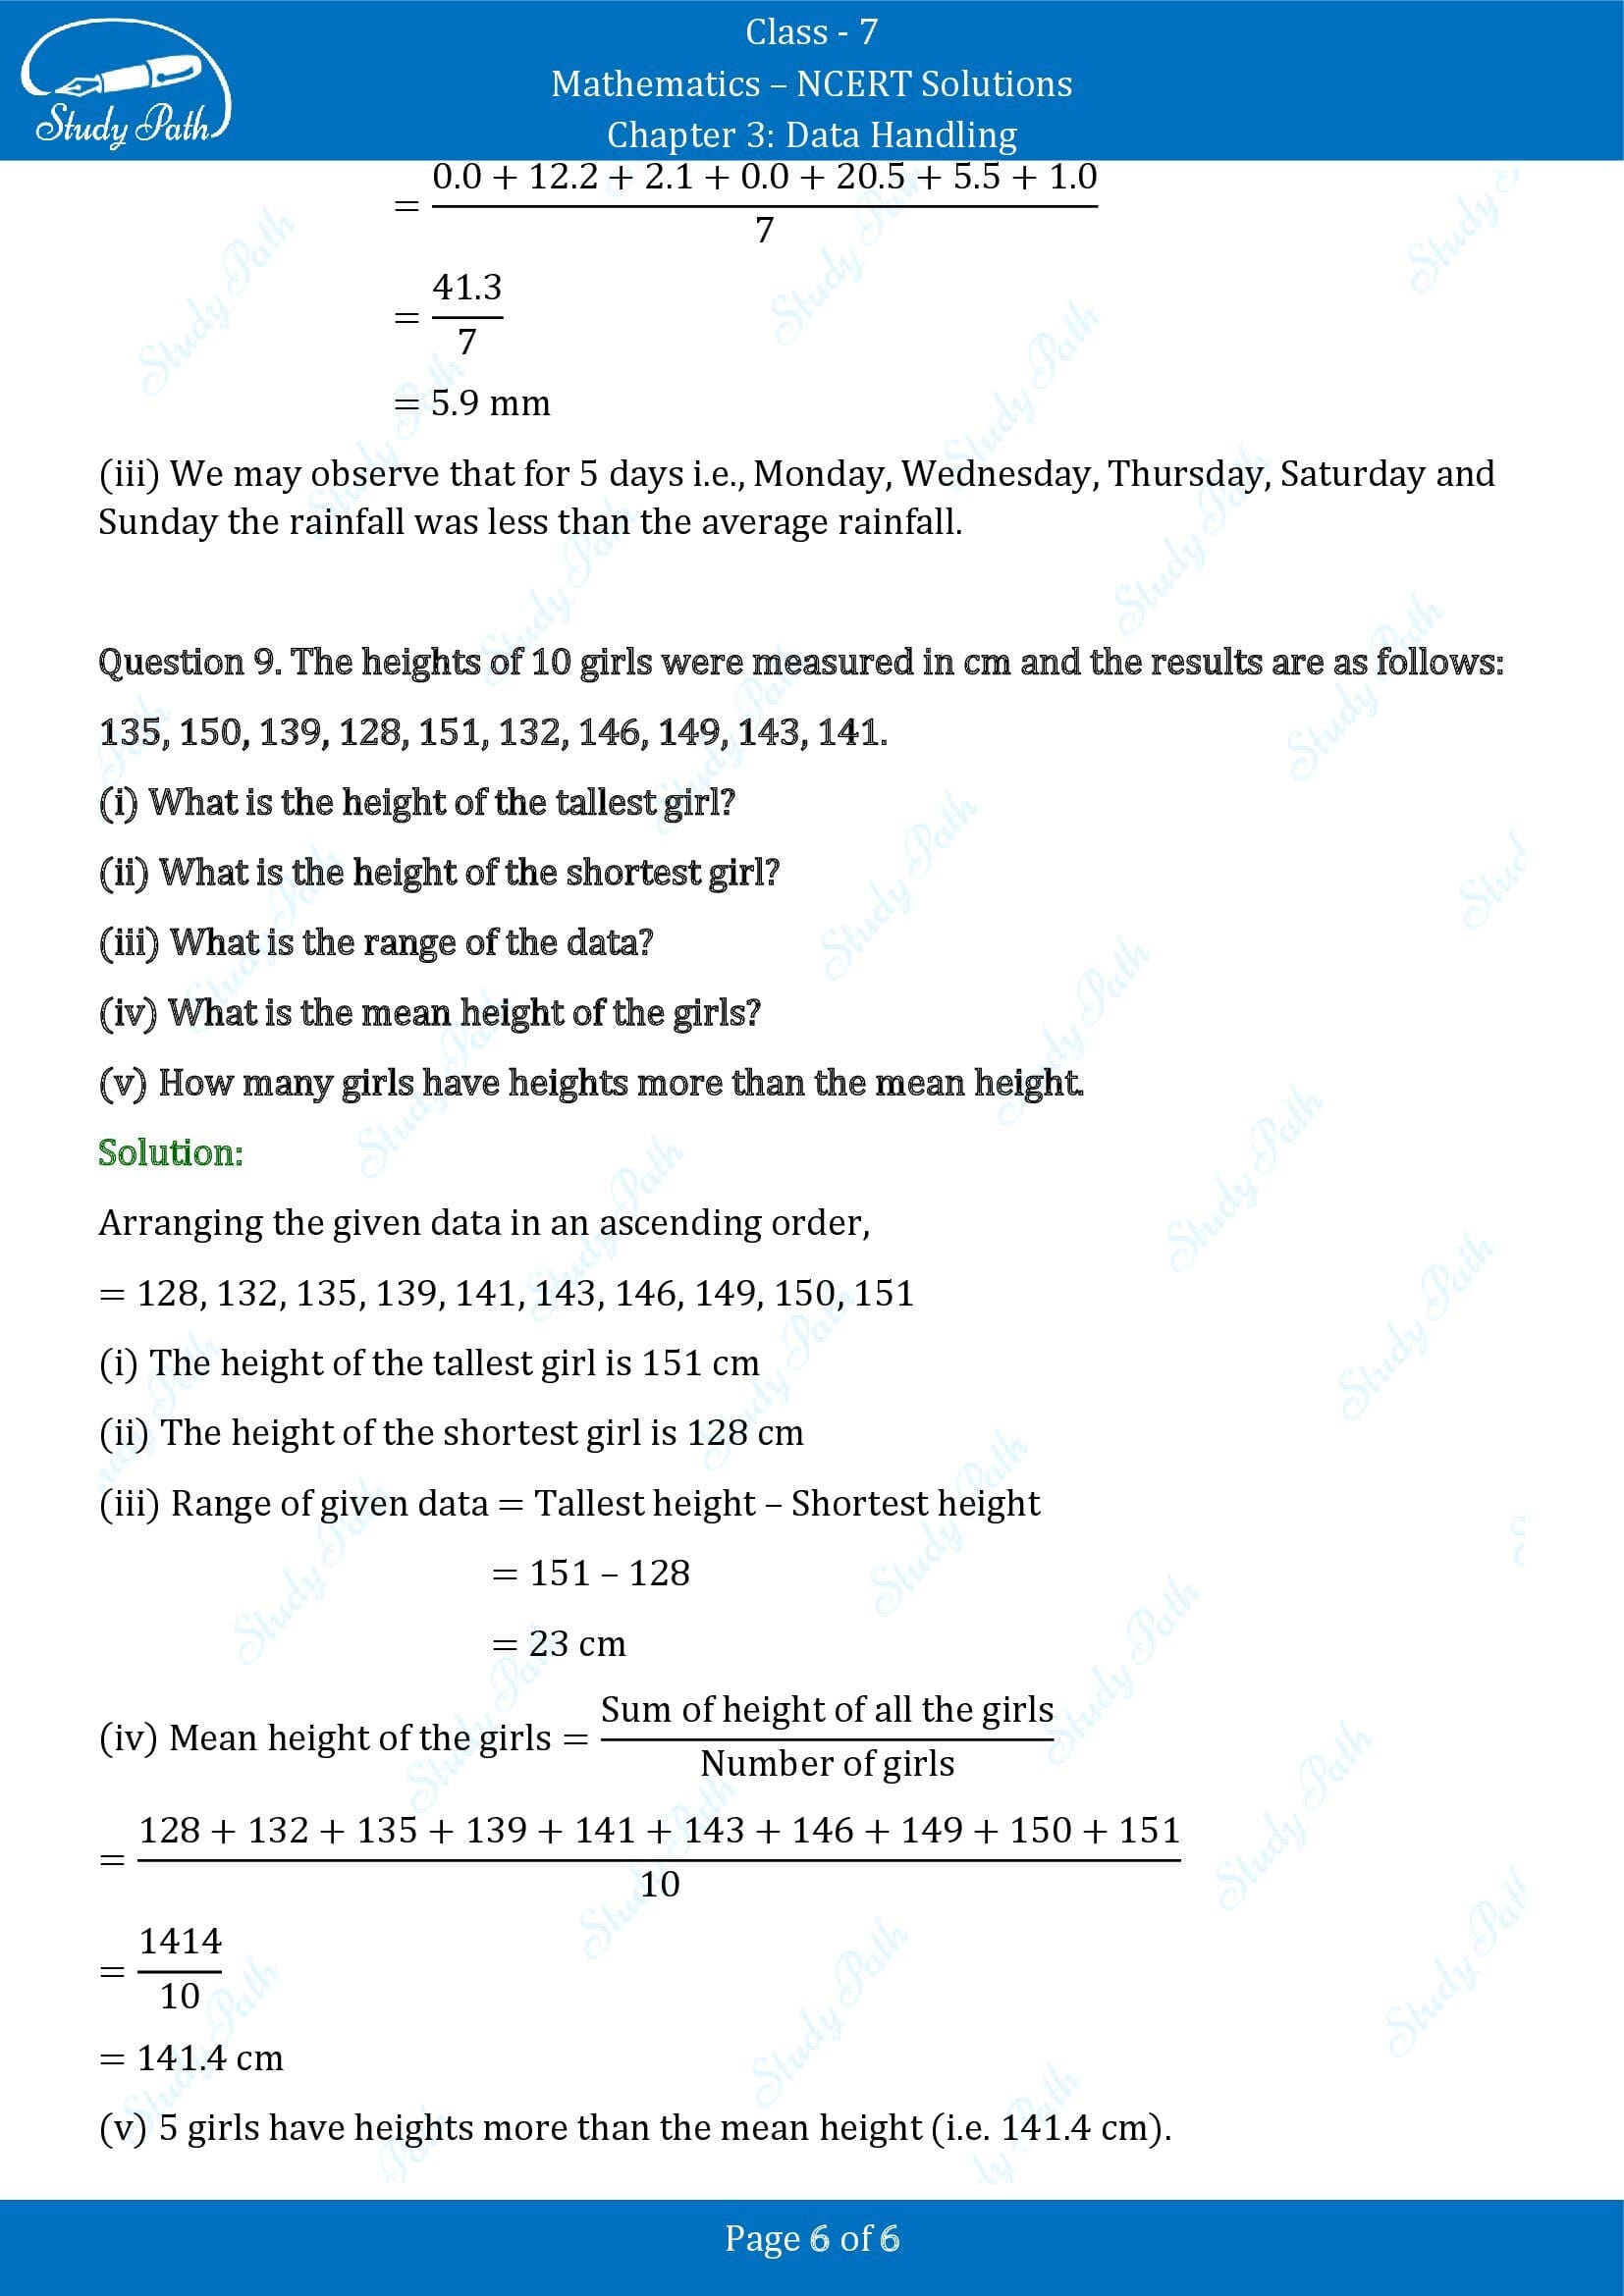 NCERT Solutions for Class 7 Maths Chapter 3 Data Handling Exercise 3.1 00006